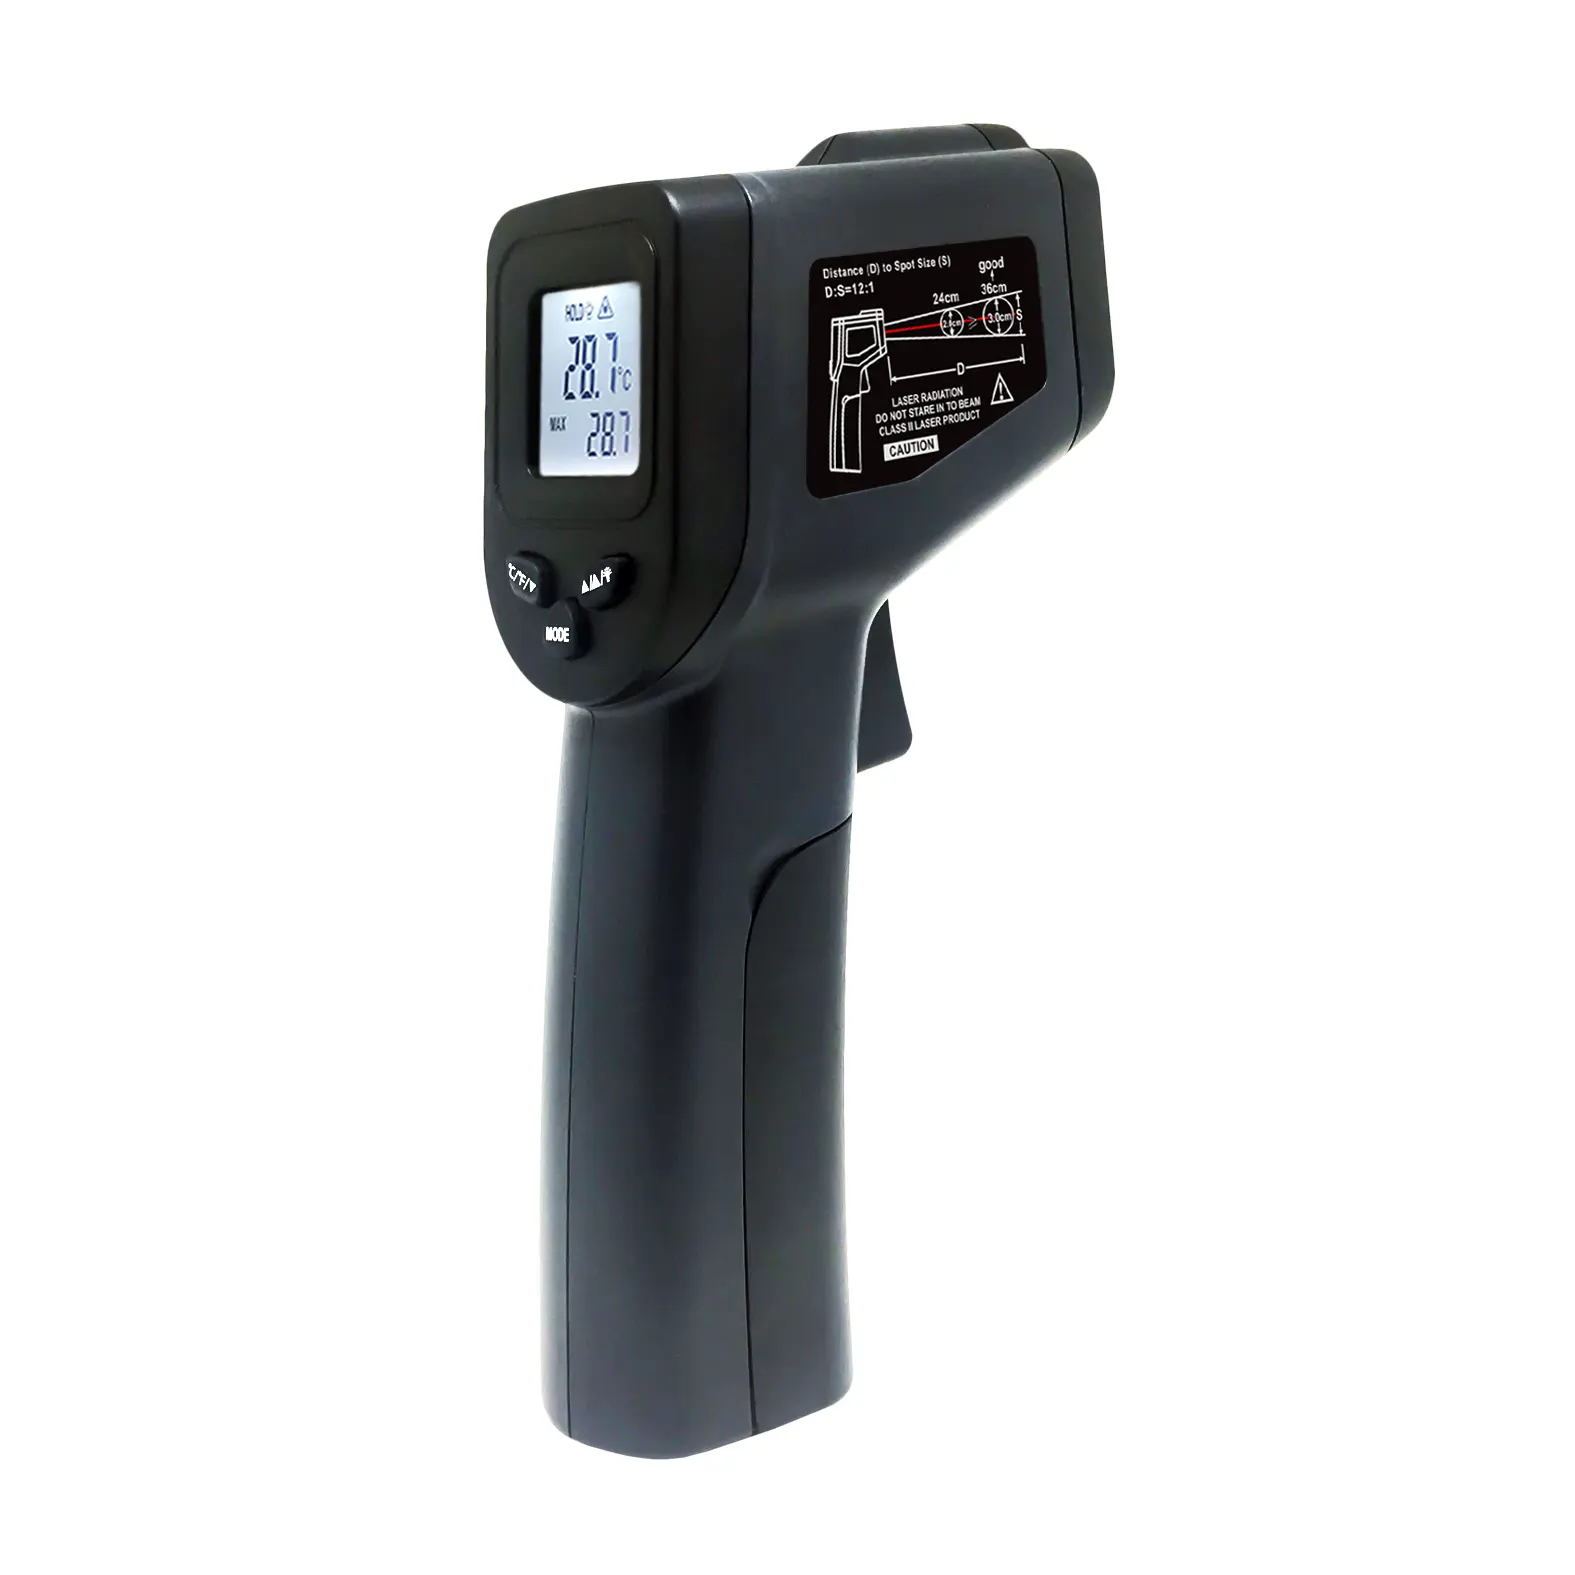 Hi Temperature Scanner Gun Long Range Rapid Detector Batteries Incl Digital Infrared Thermometer for industry